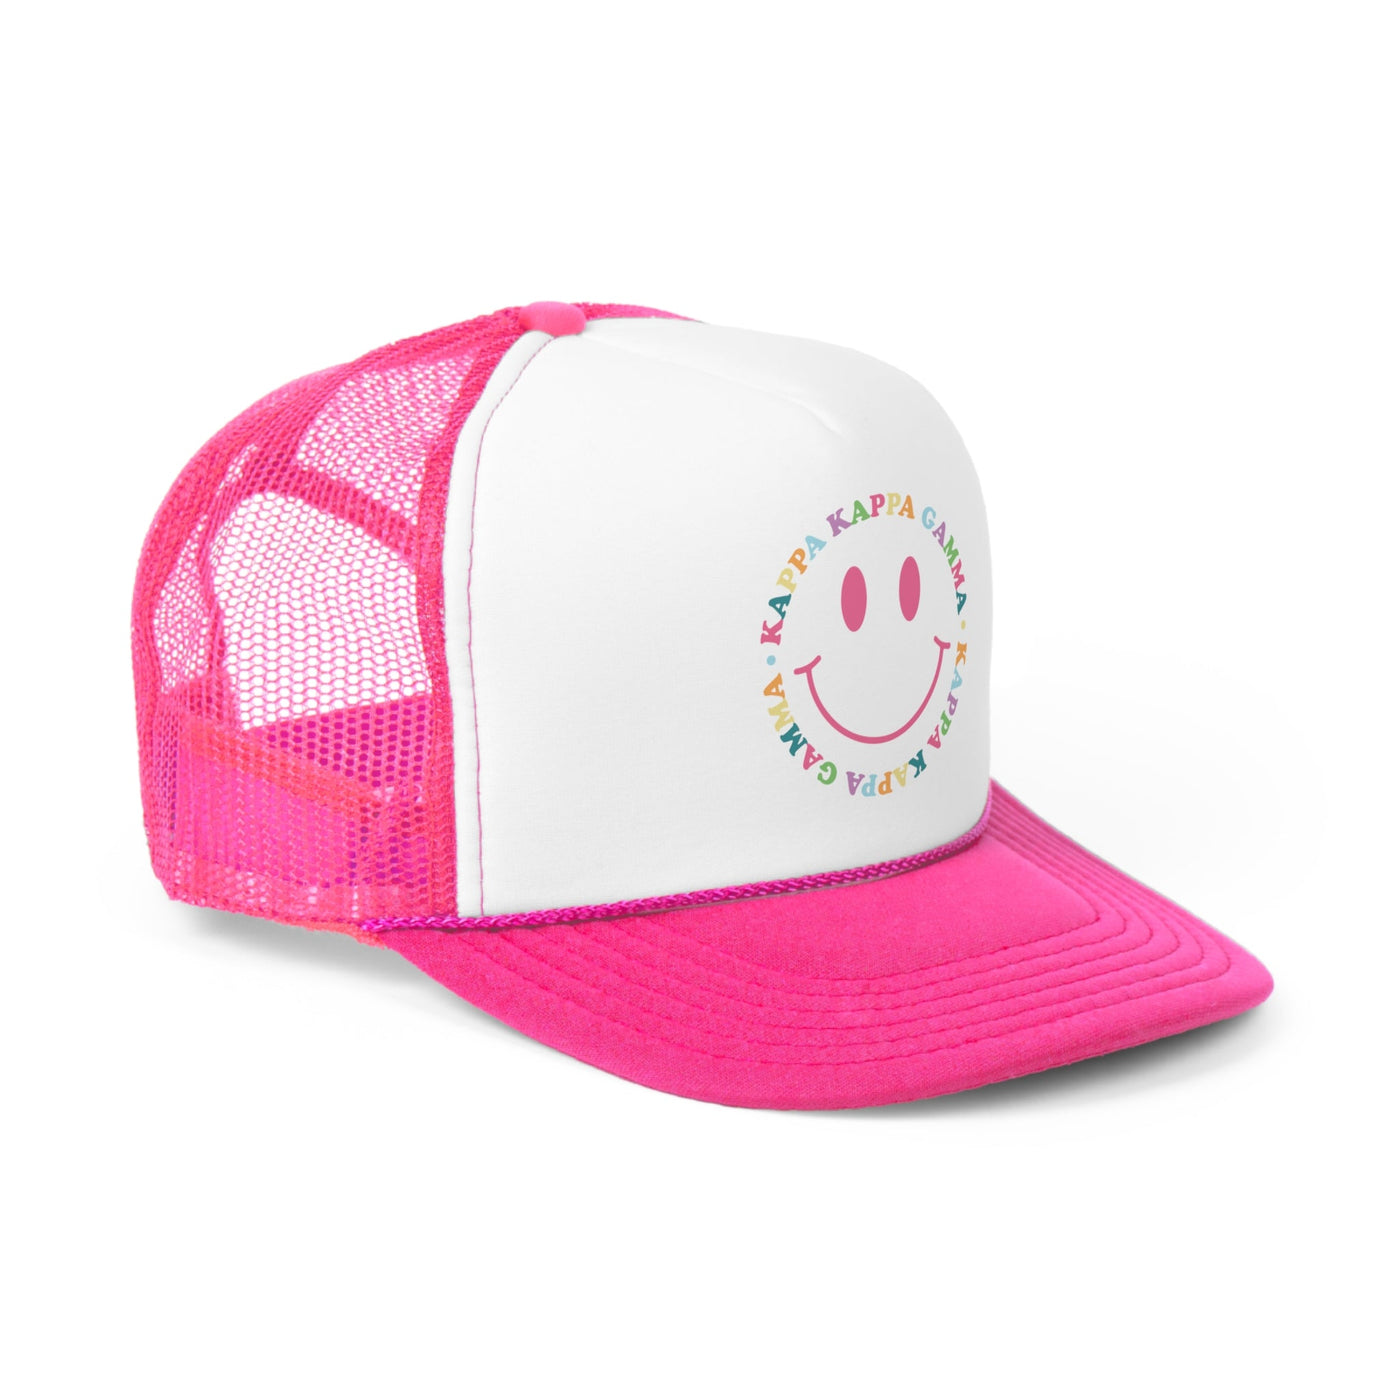 Kappa Kappa Gamma Colorful Smile Foam Trucker Hat